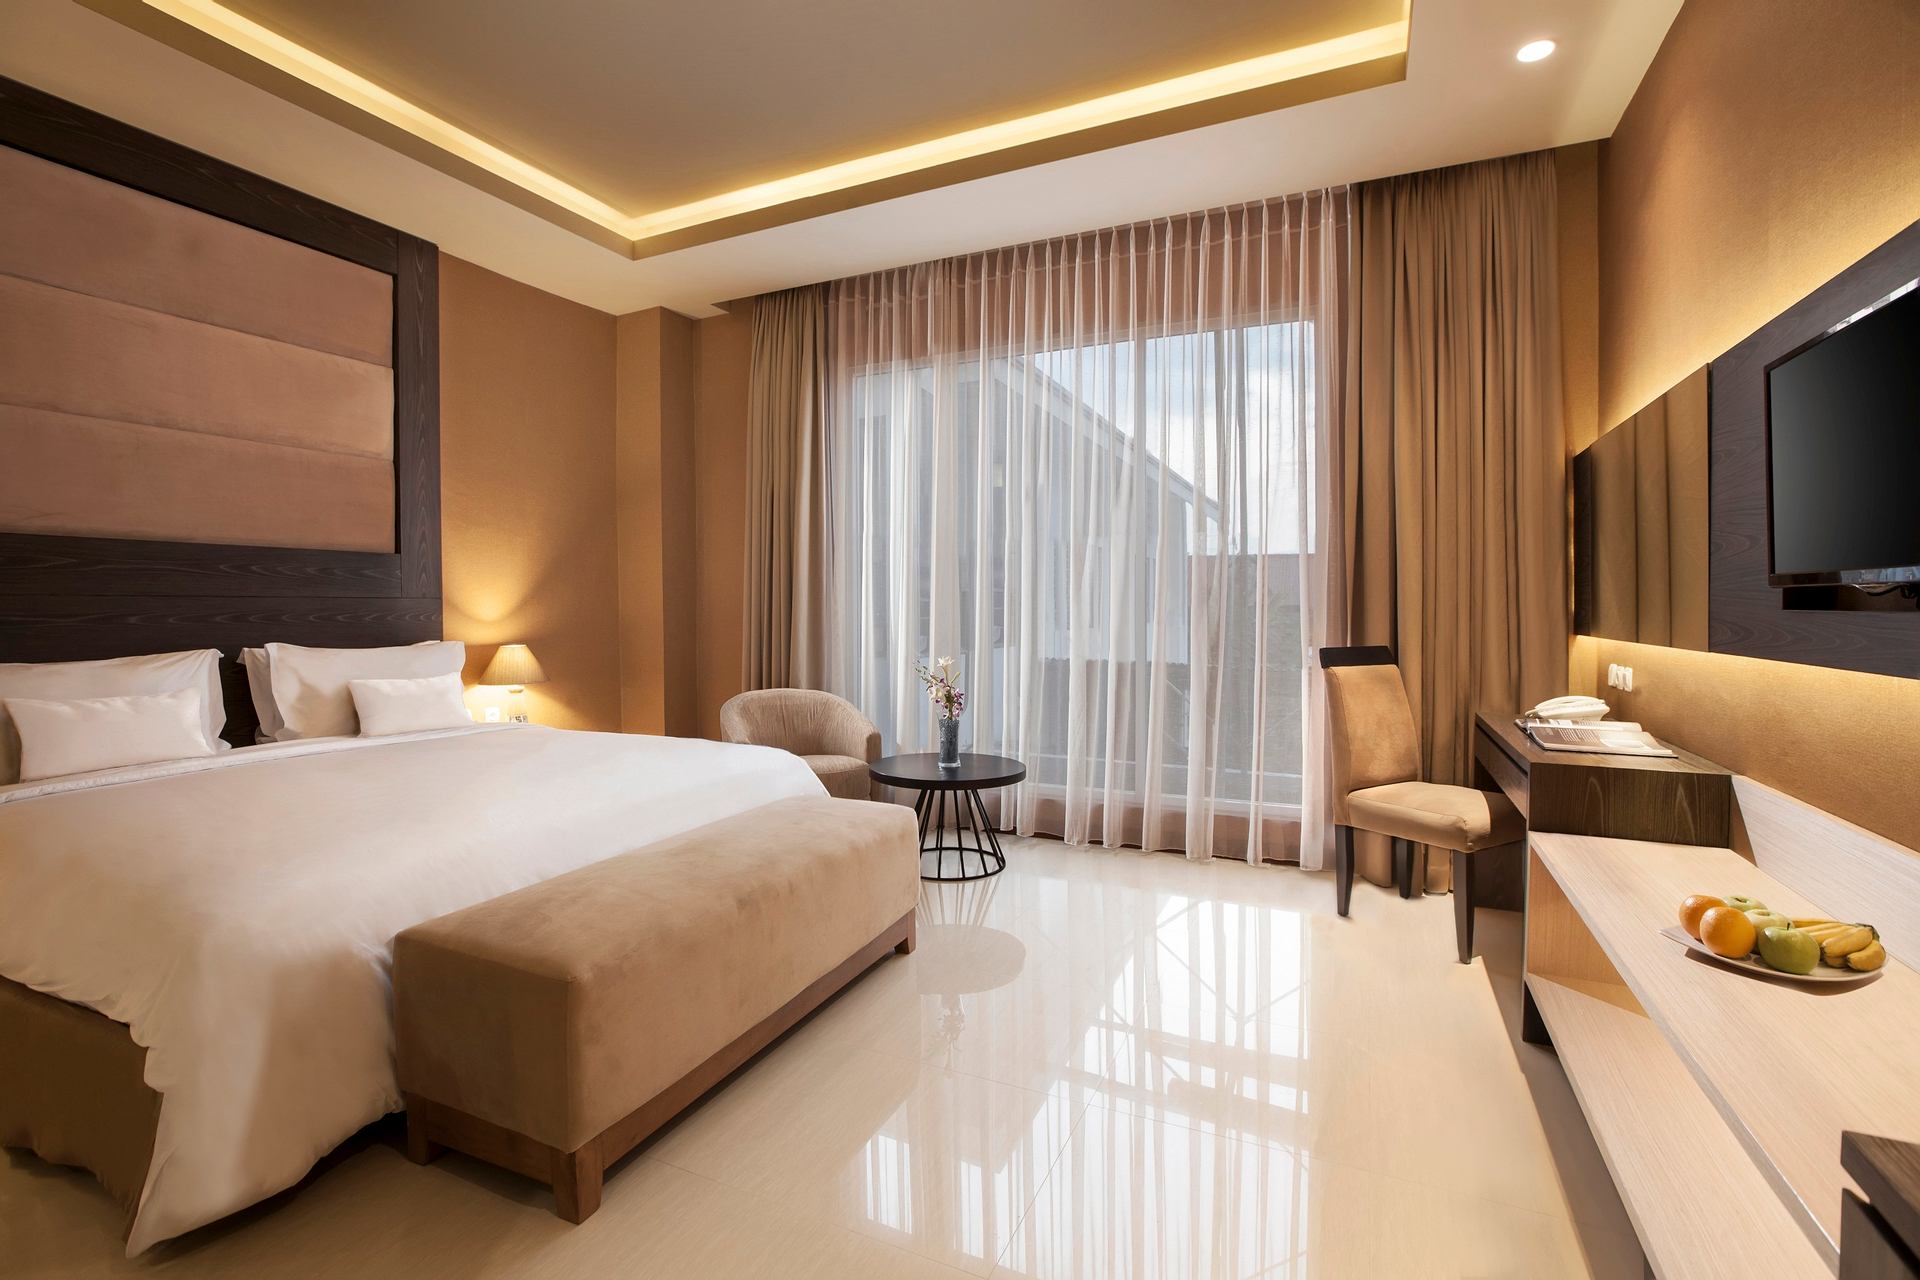 Bedroom 3, Aveon Express Hotel Yogyakarta by Daphna International, Yogyakarta